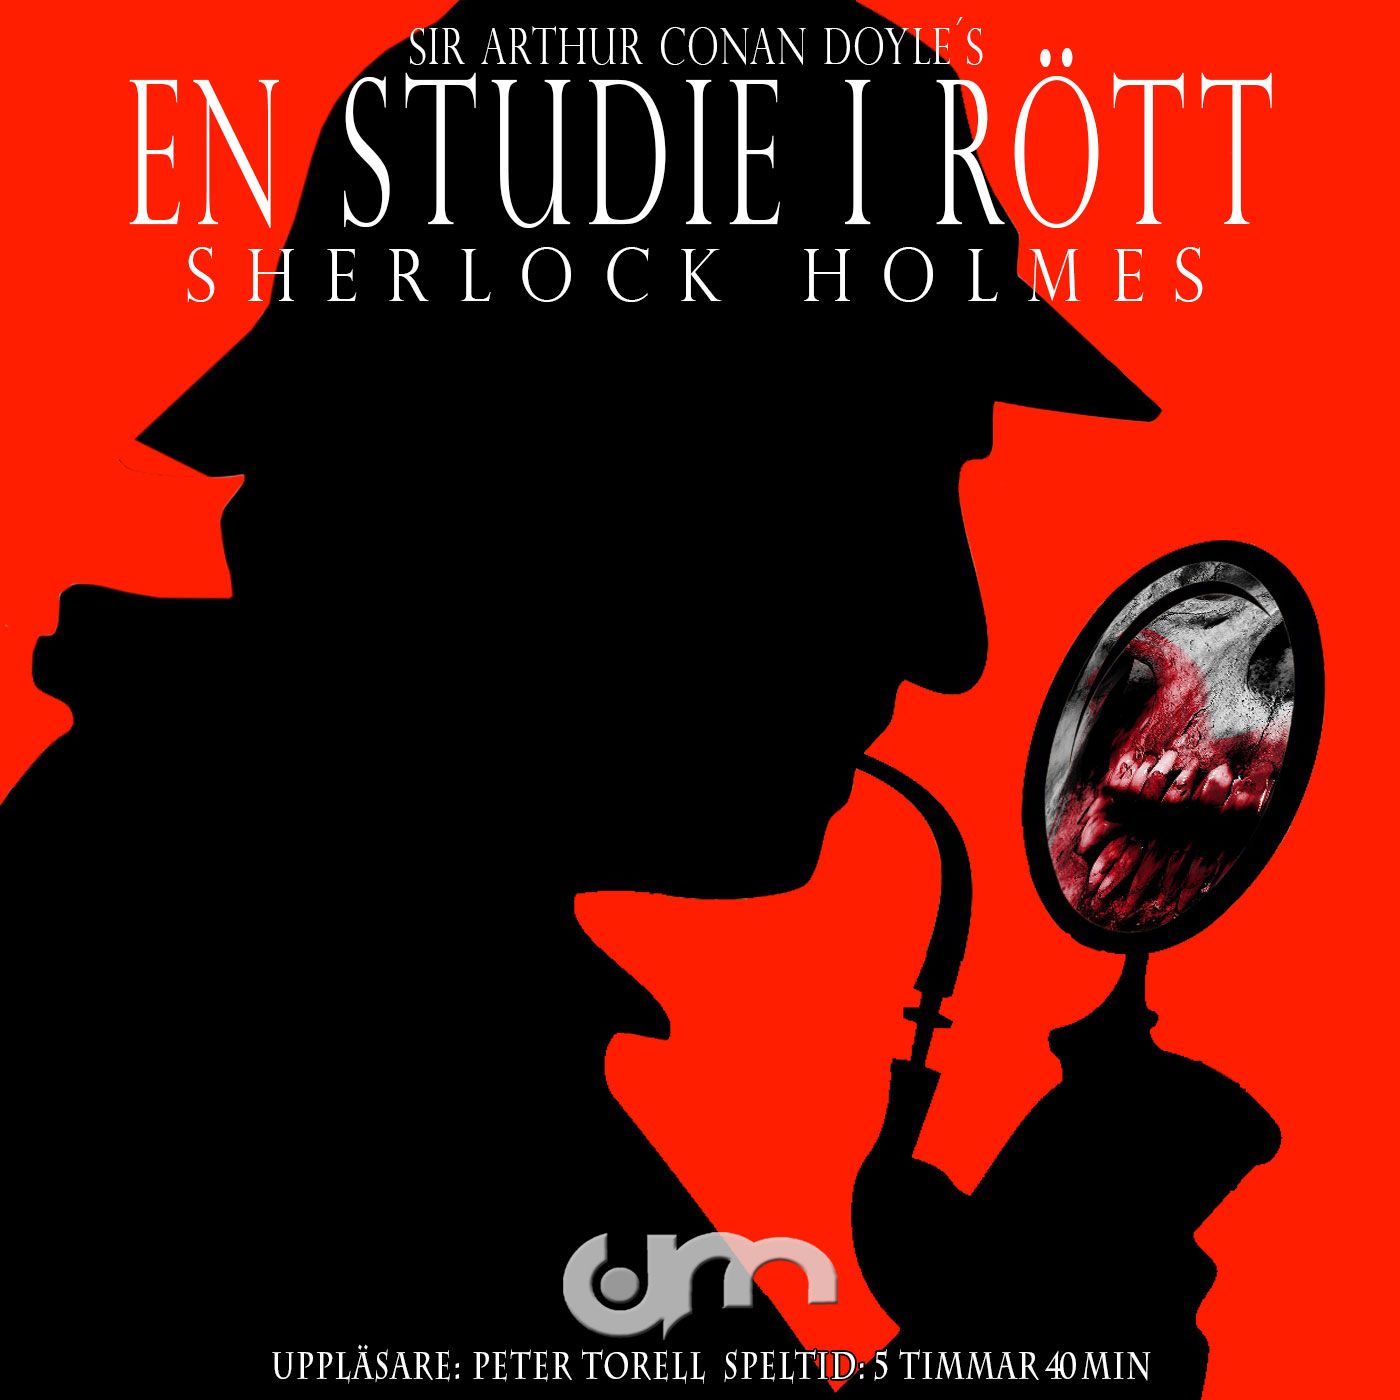 En studie i rött, audiobook by Sir Arthur Conan Doyle